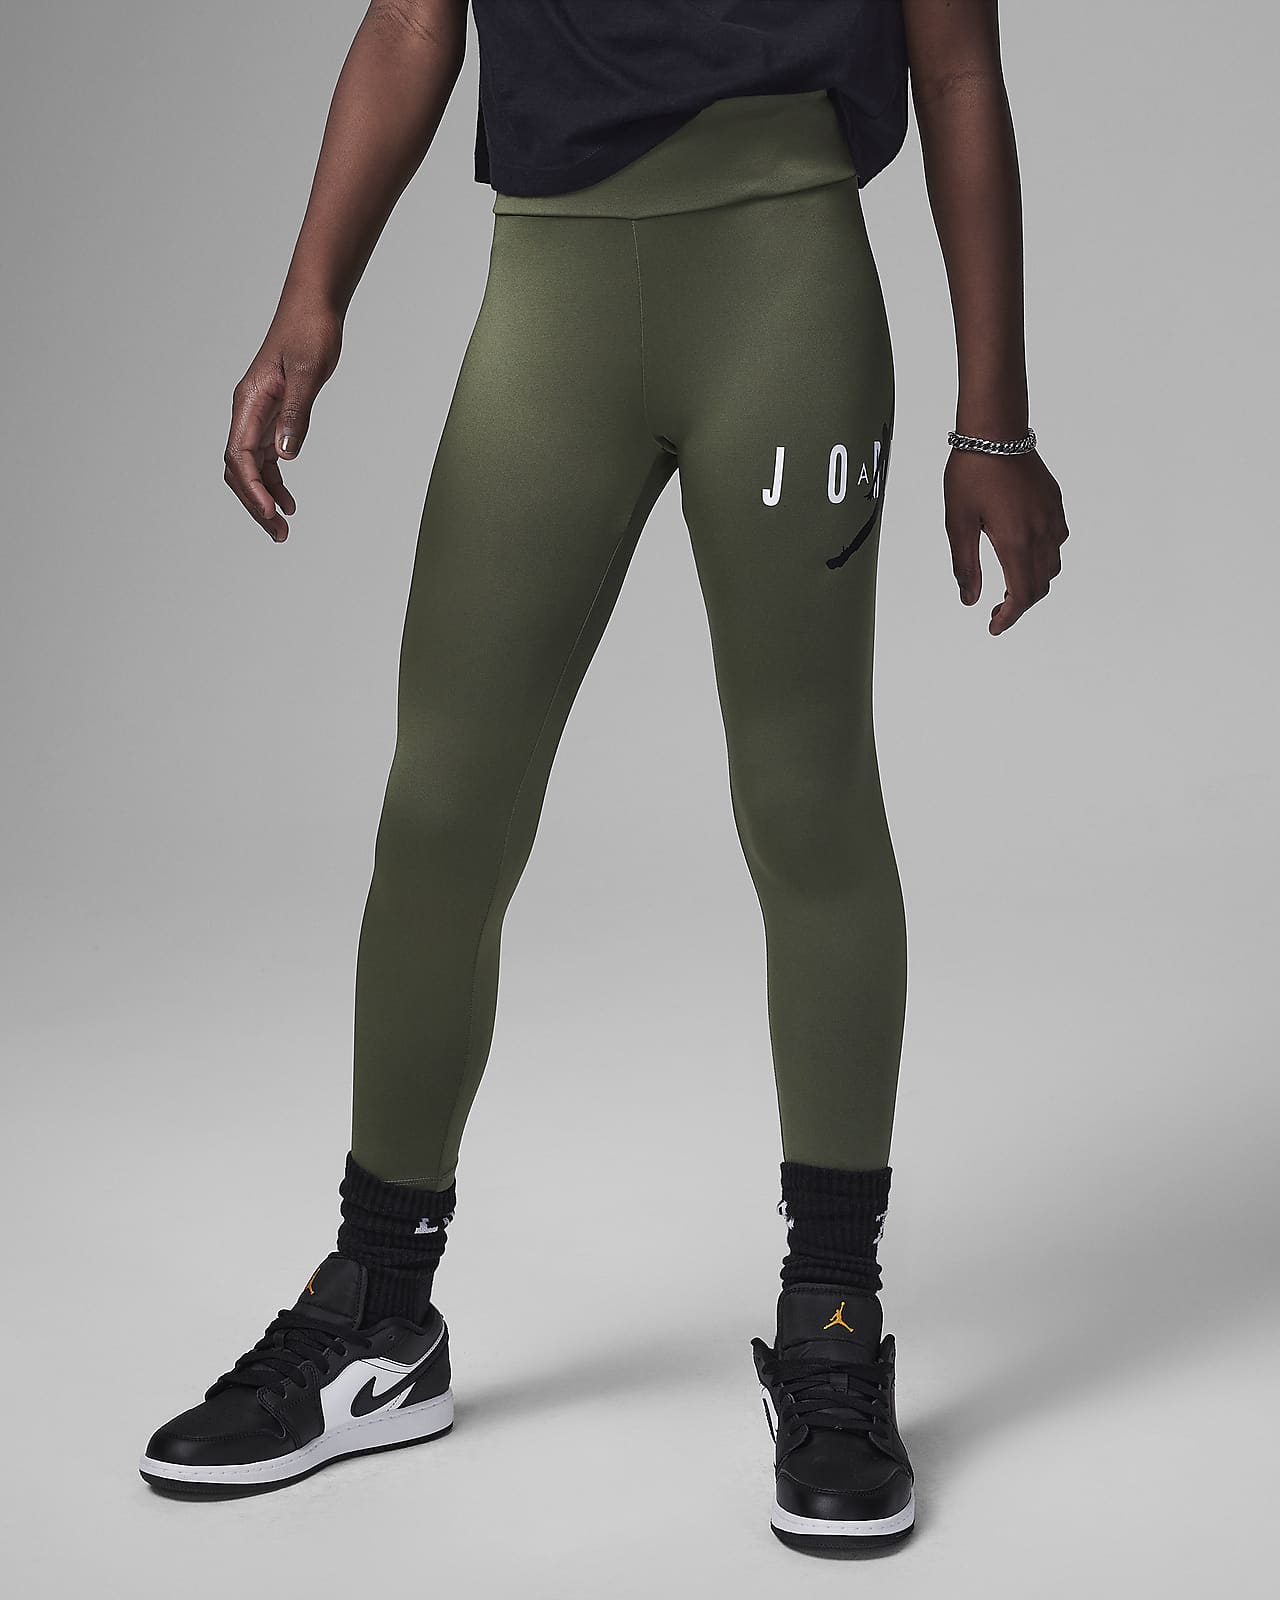 Jordan Leggings Jumpman con materiales sostenibles - Niño/a